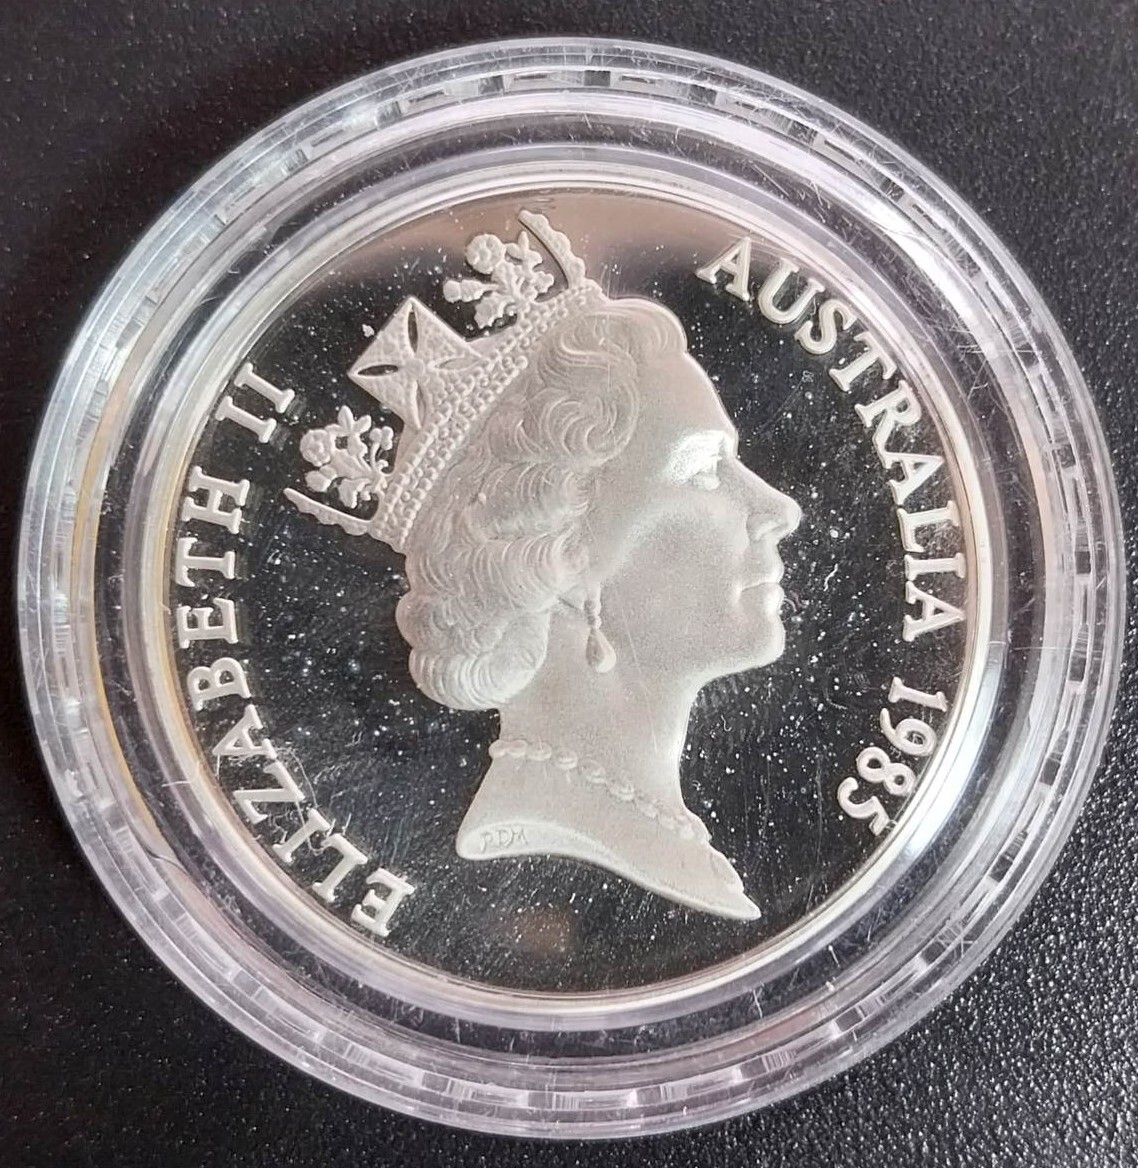 1985 $10 Victoria Silver Proof Coin in Capsule